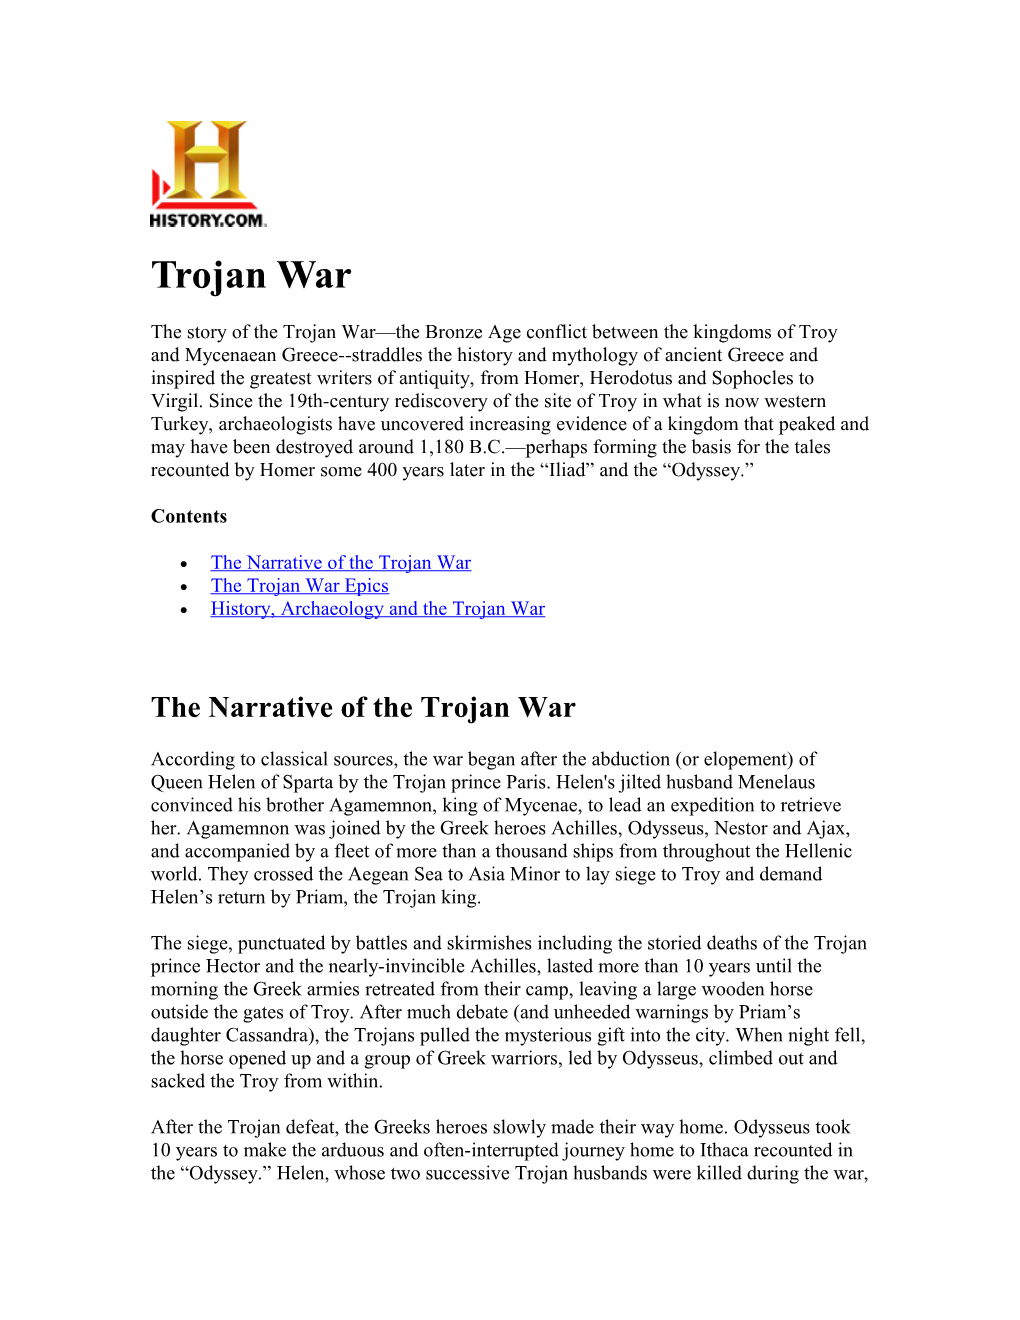 The Narrative of the Trojan War